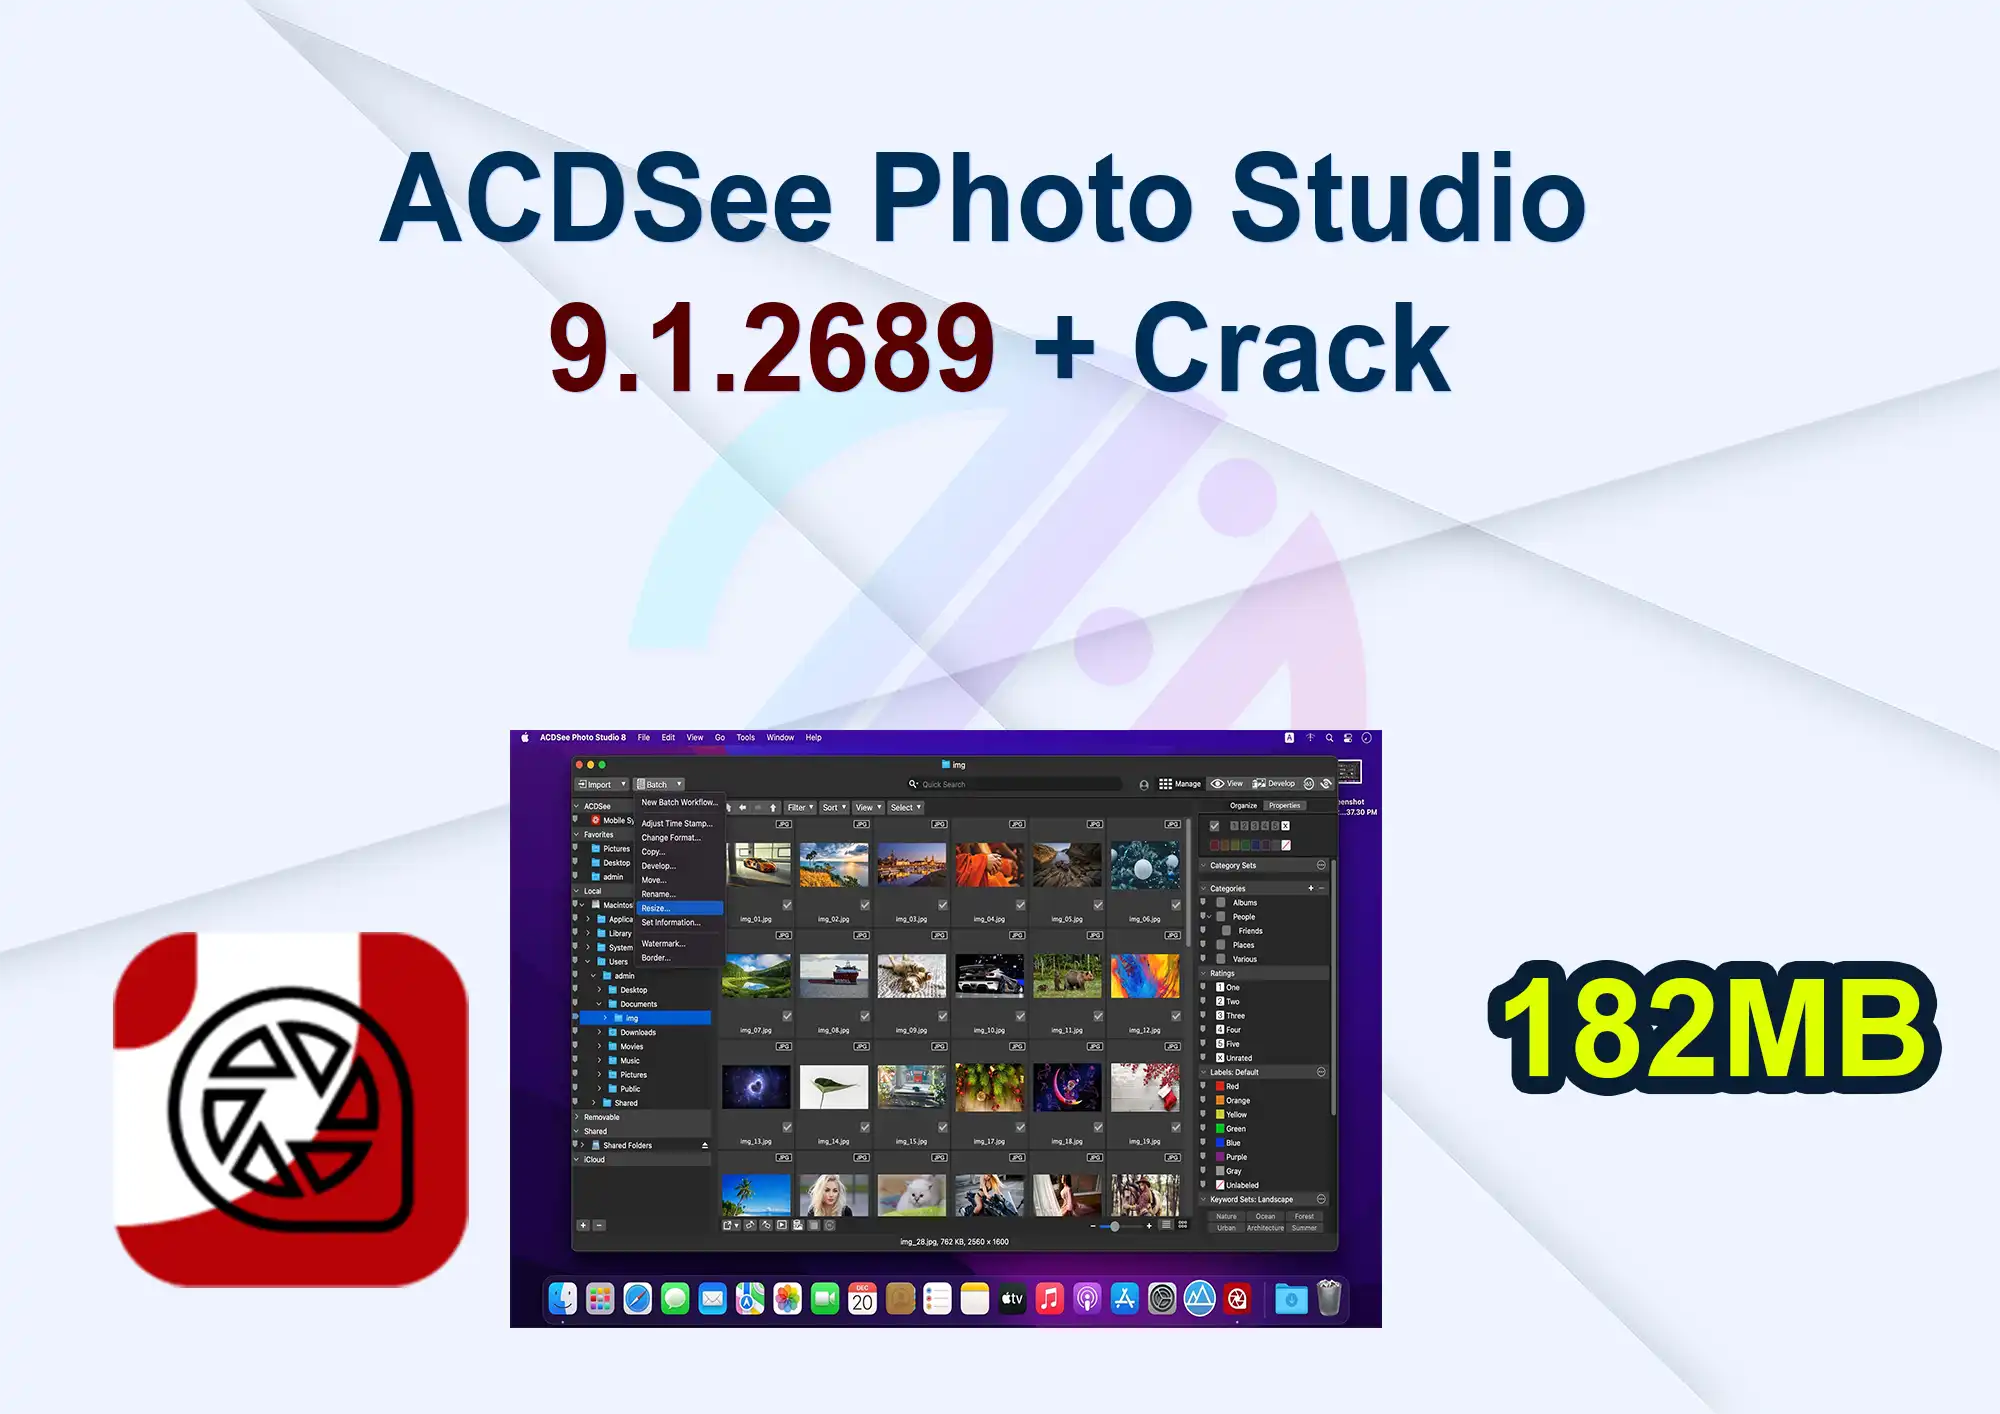 ACDSee Photo Studio 9.1.2689 + Crack